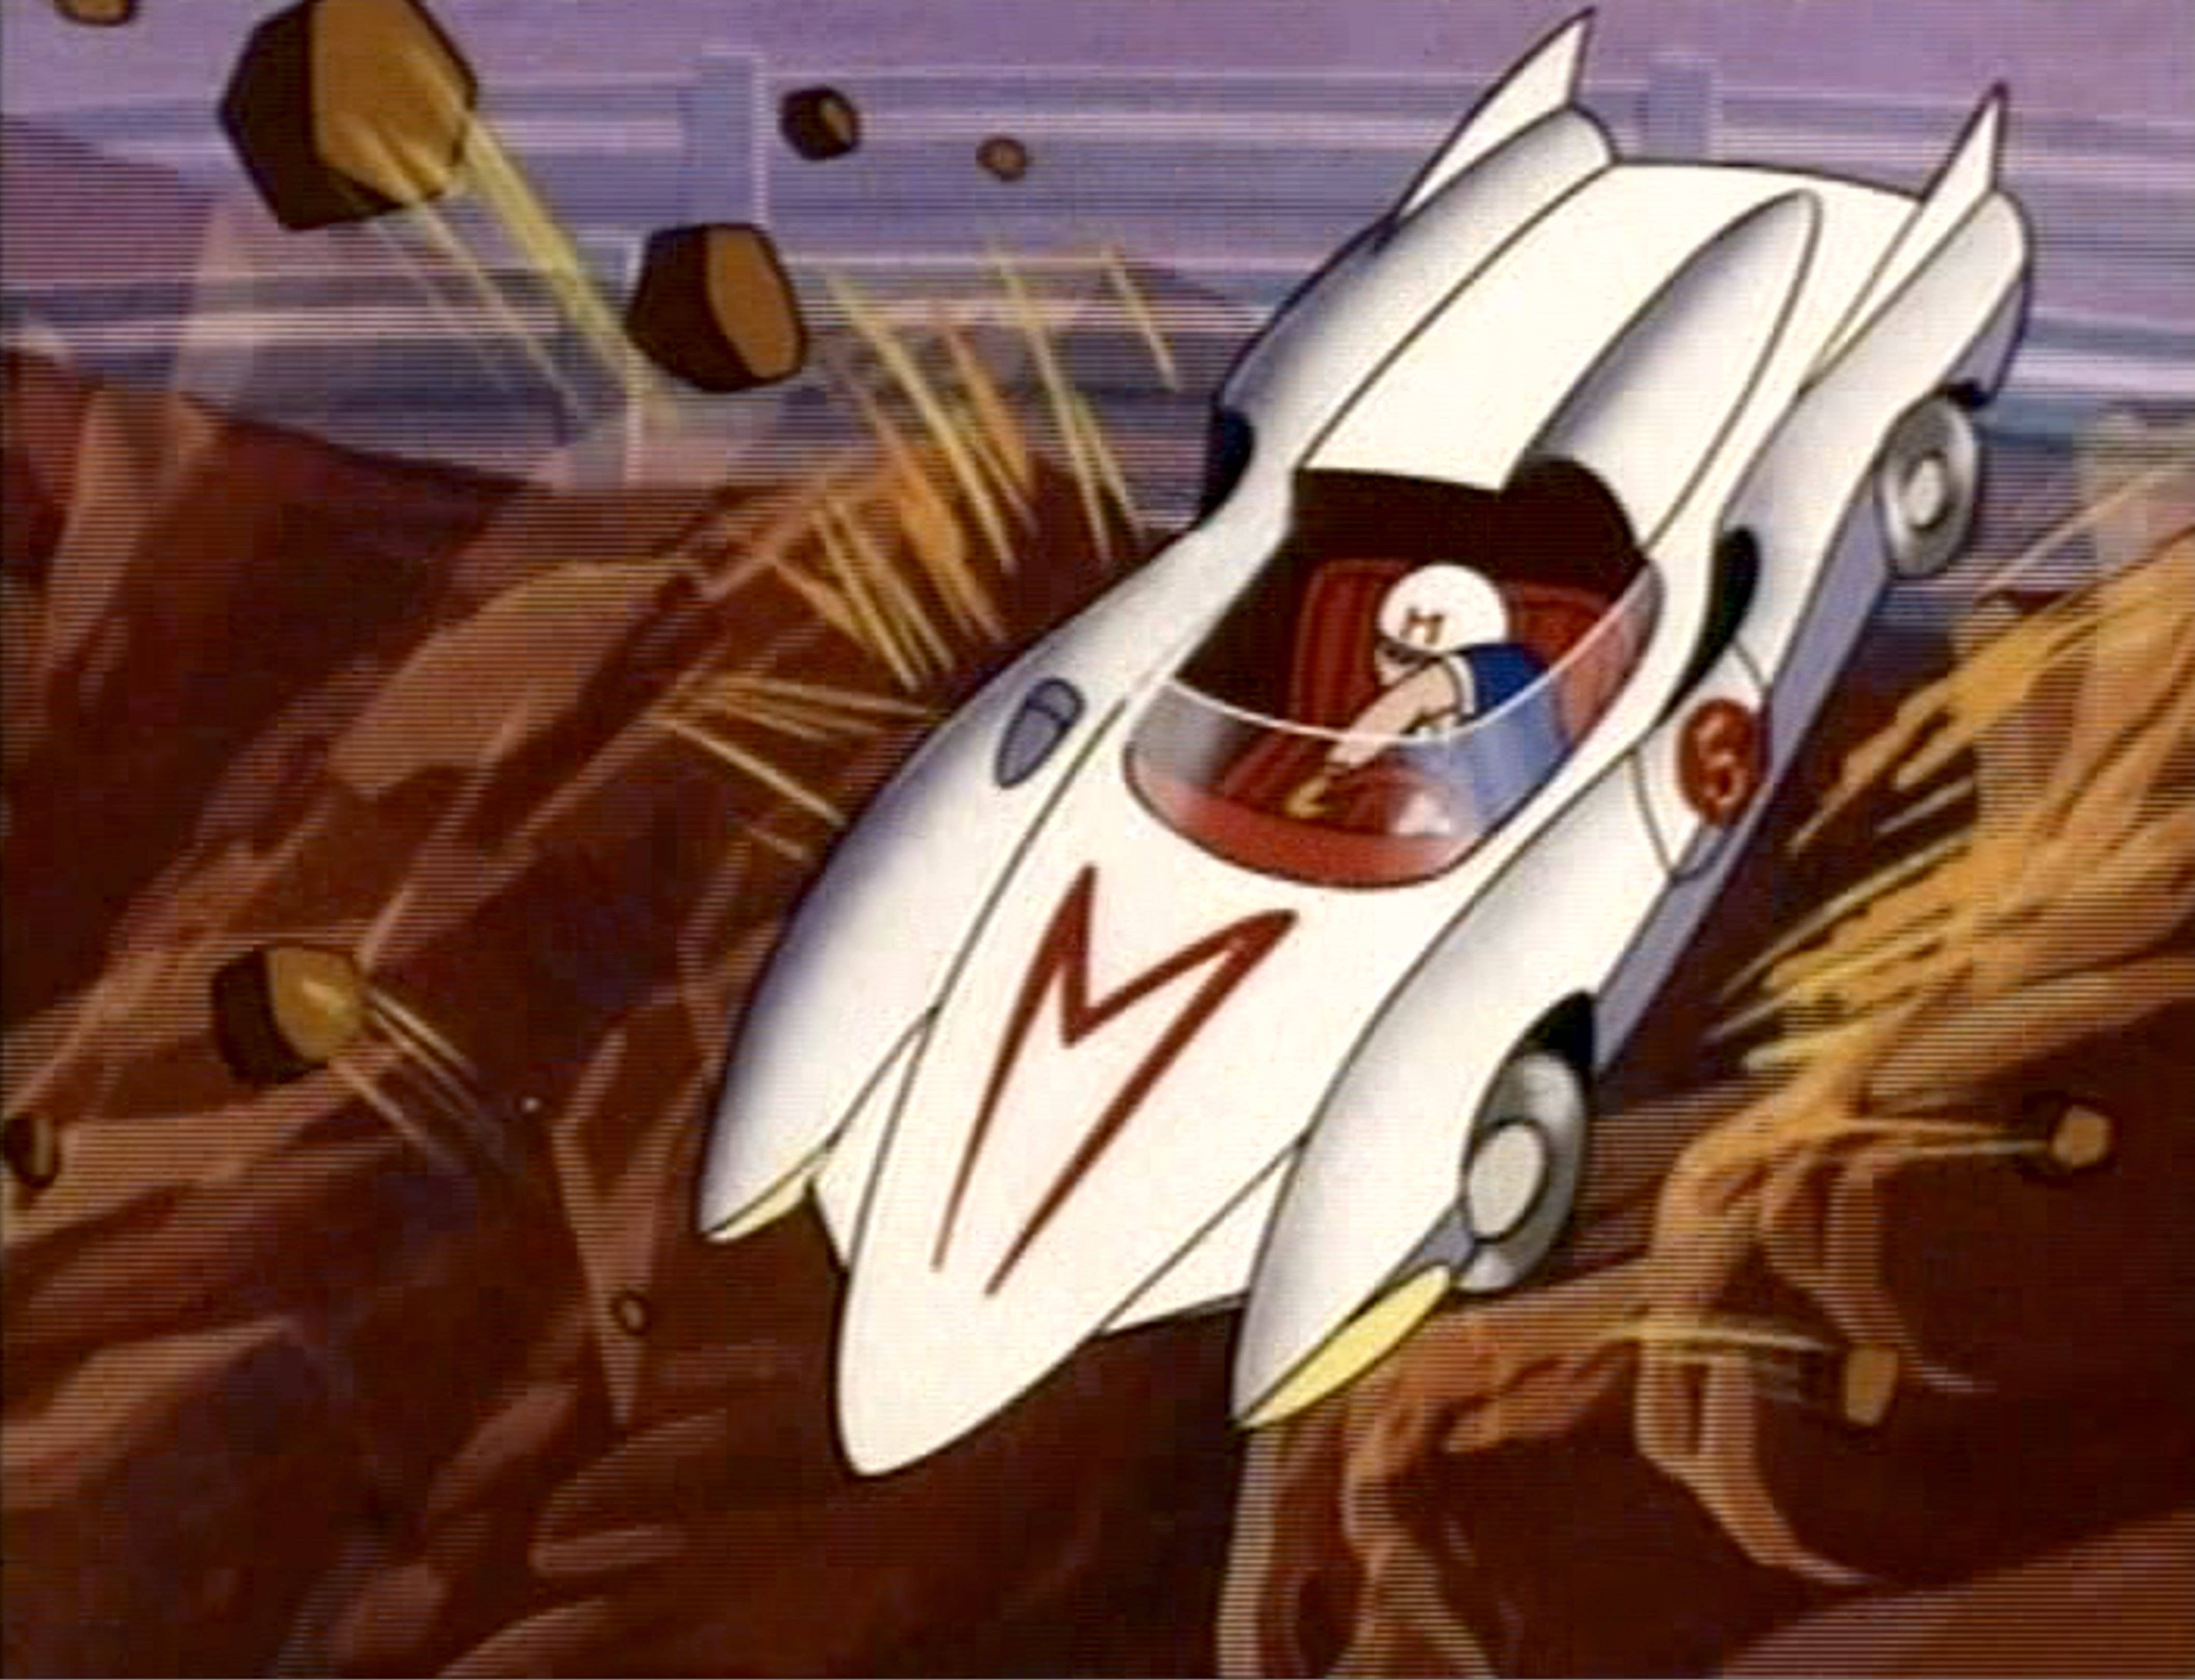 Speed Racer Mach 5 Picture - Image de Speed Racer dans le Mach 5